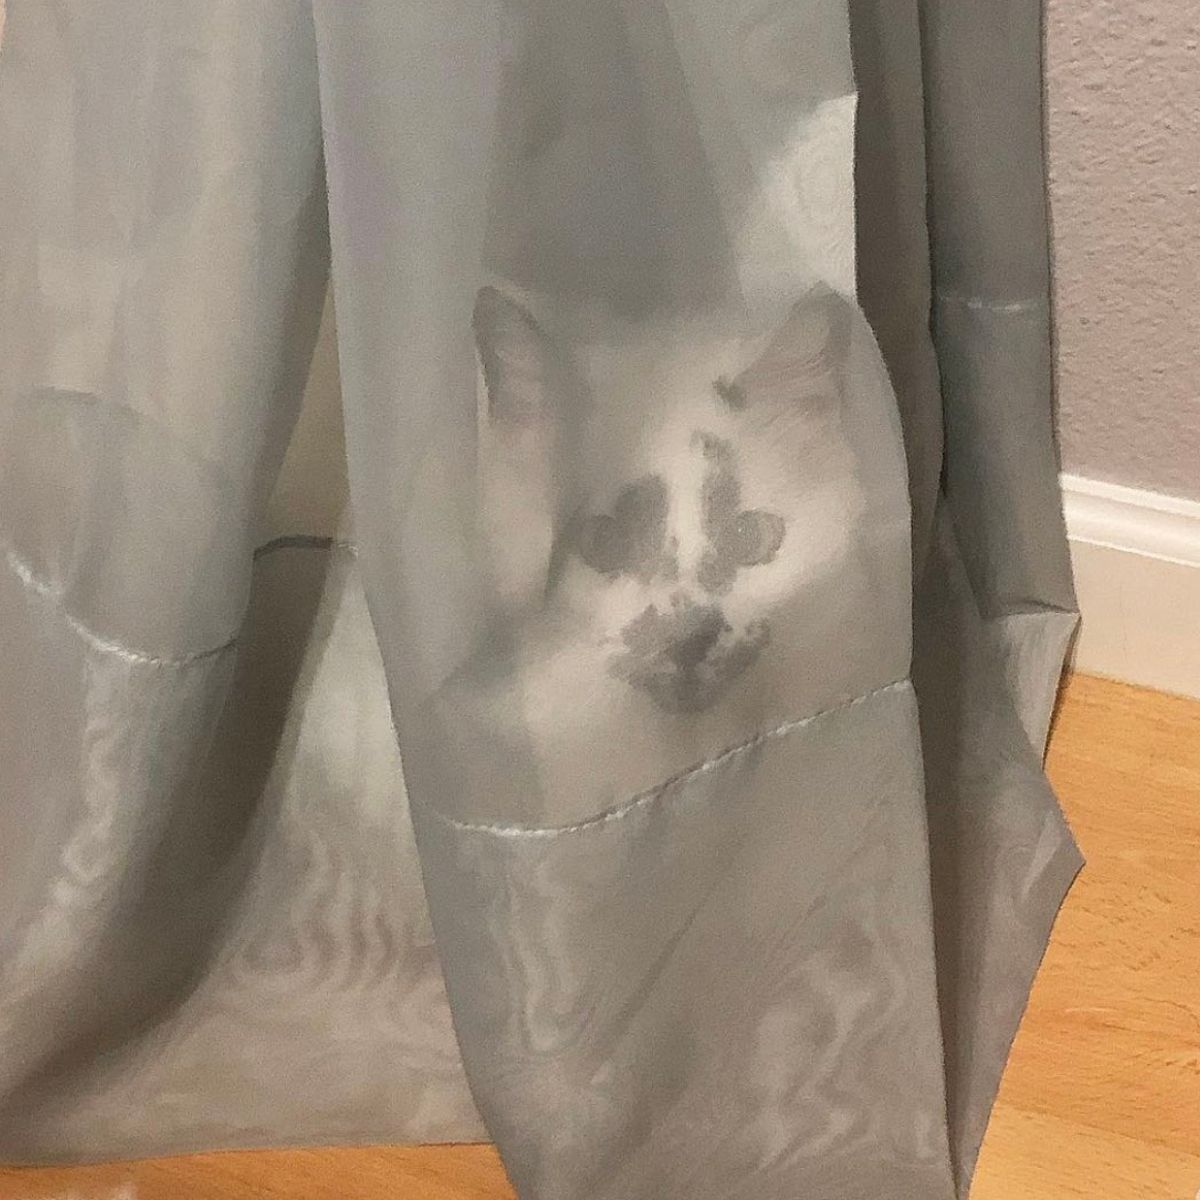 cat hiding behind the curtain